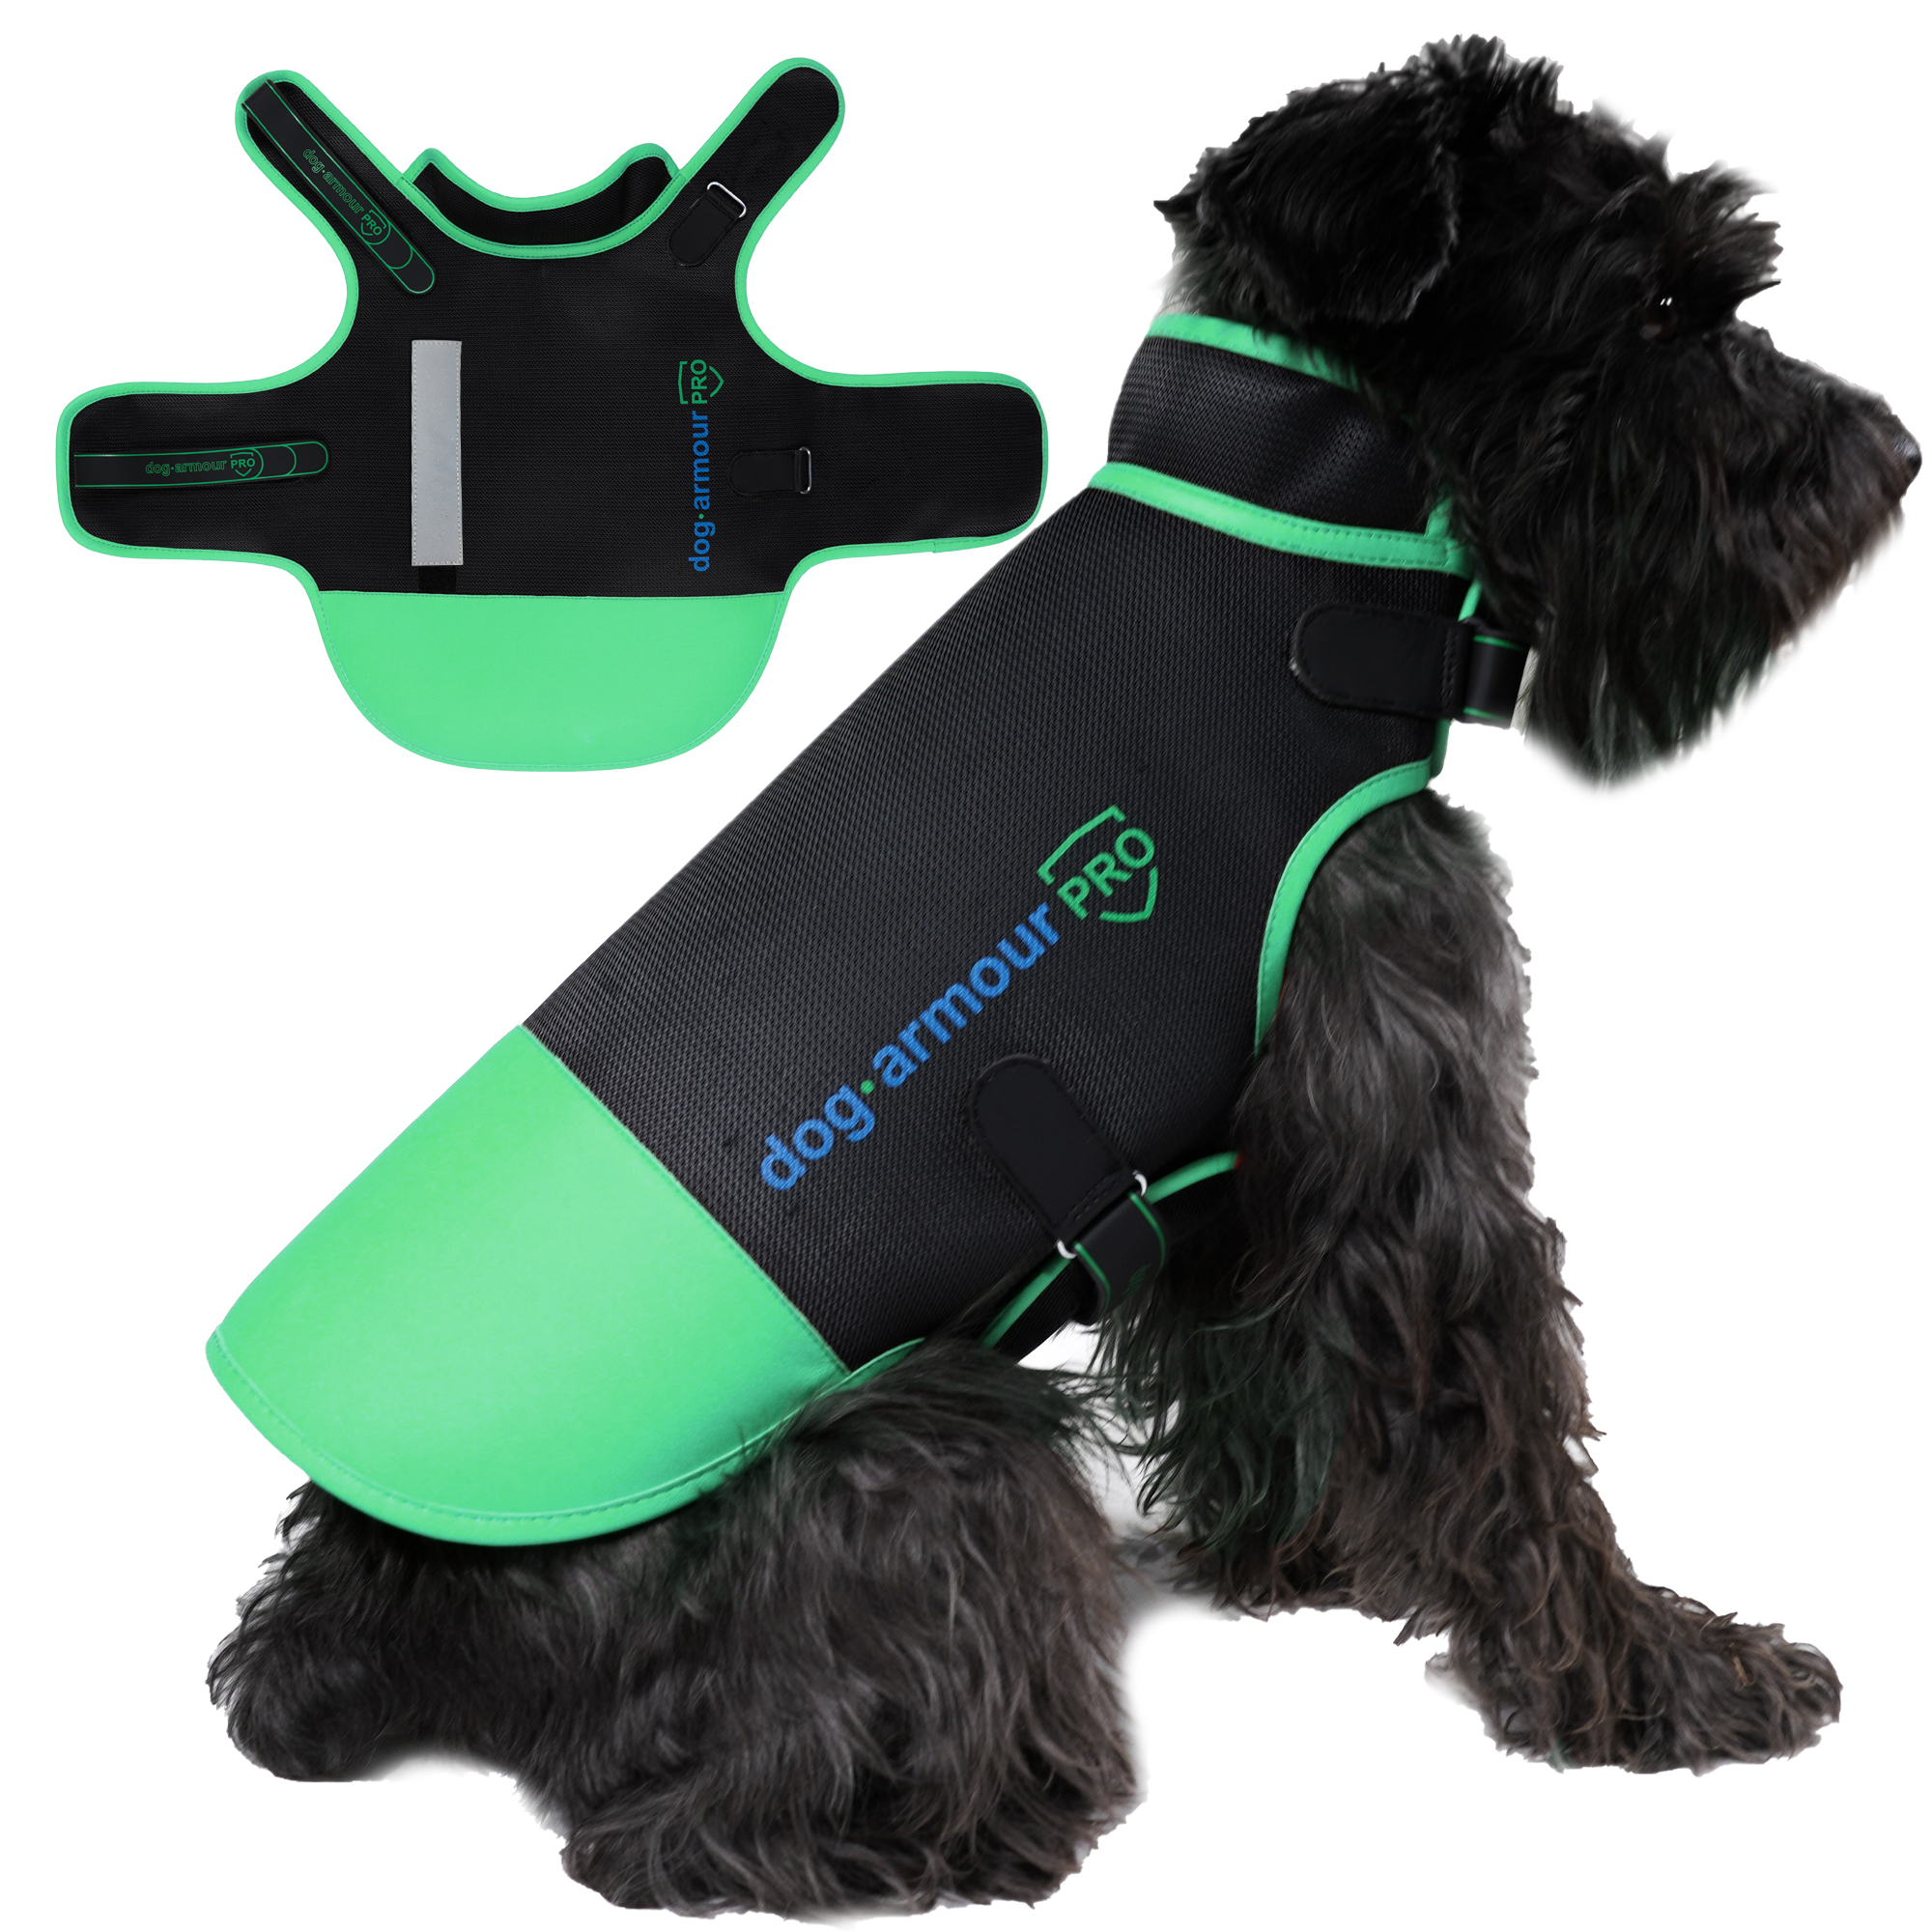 New K2 anti-bite vest dog armour PRO